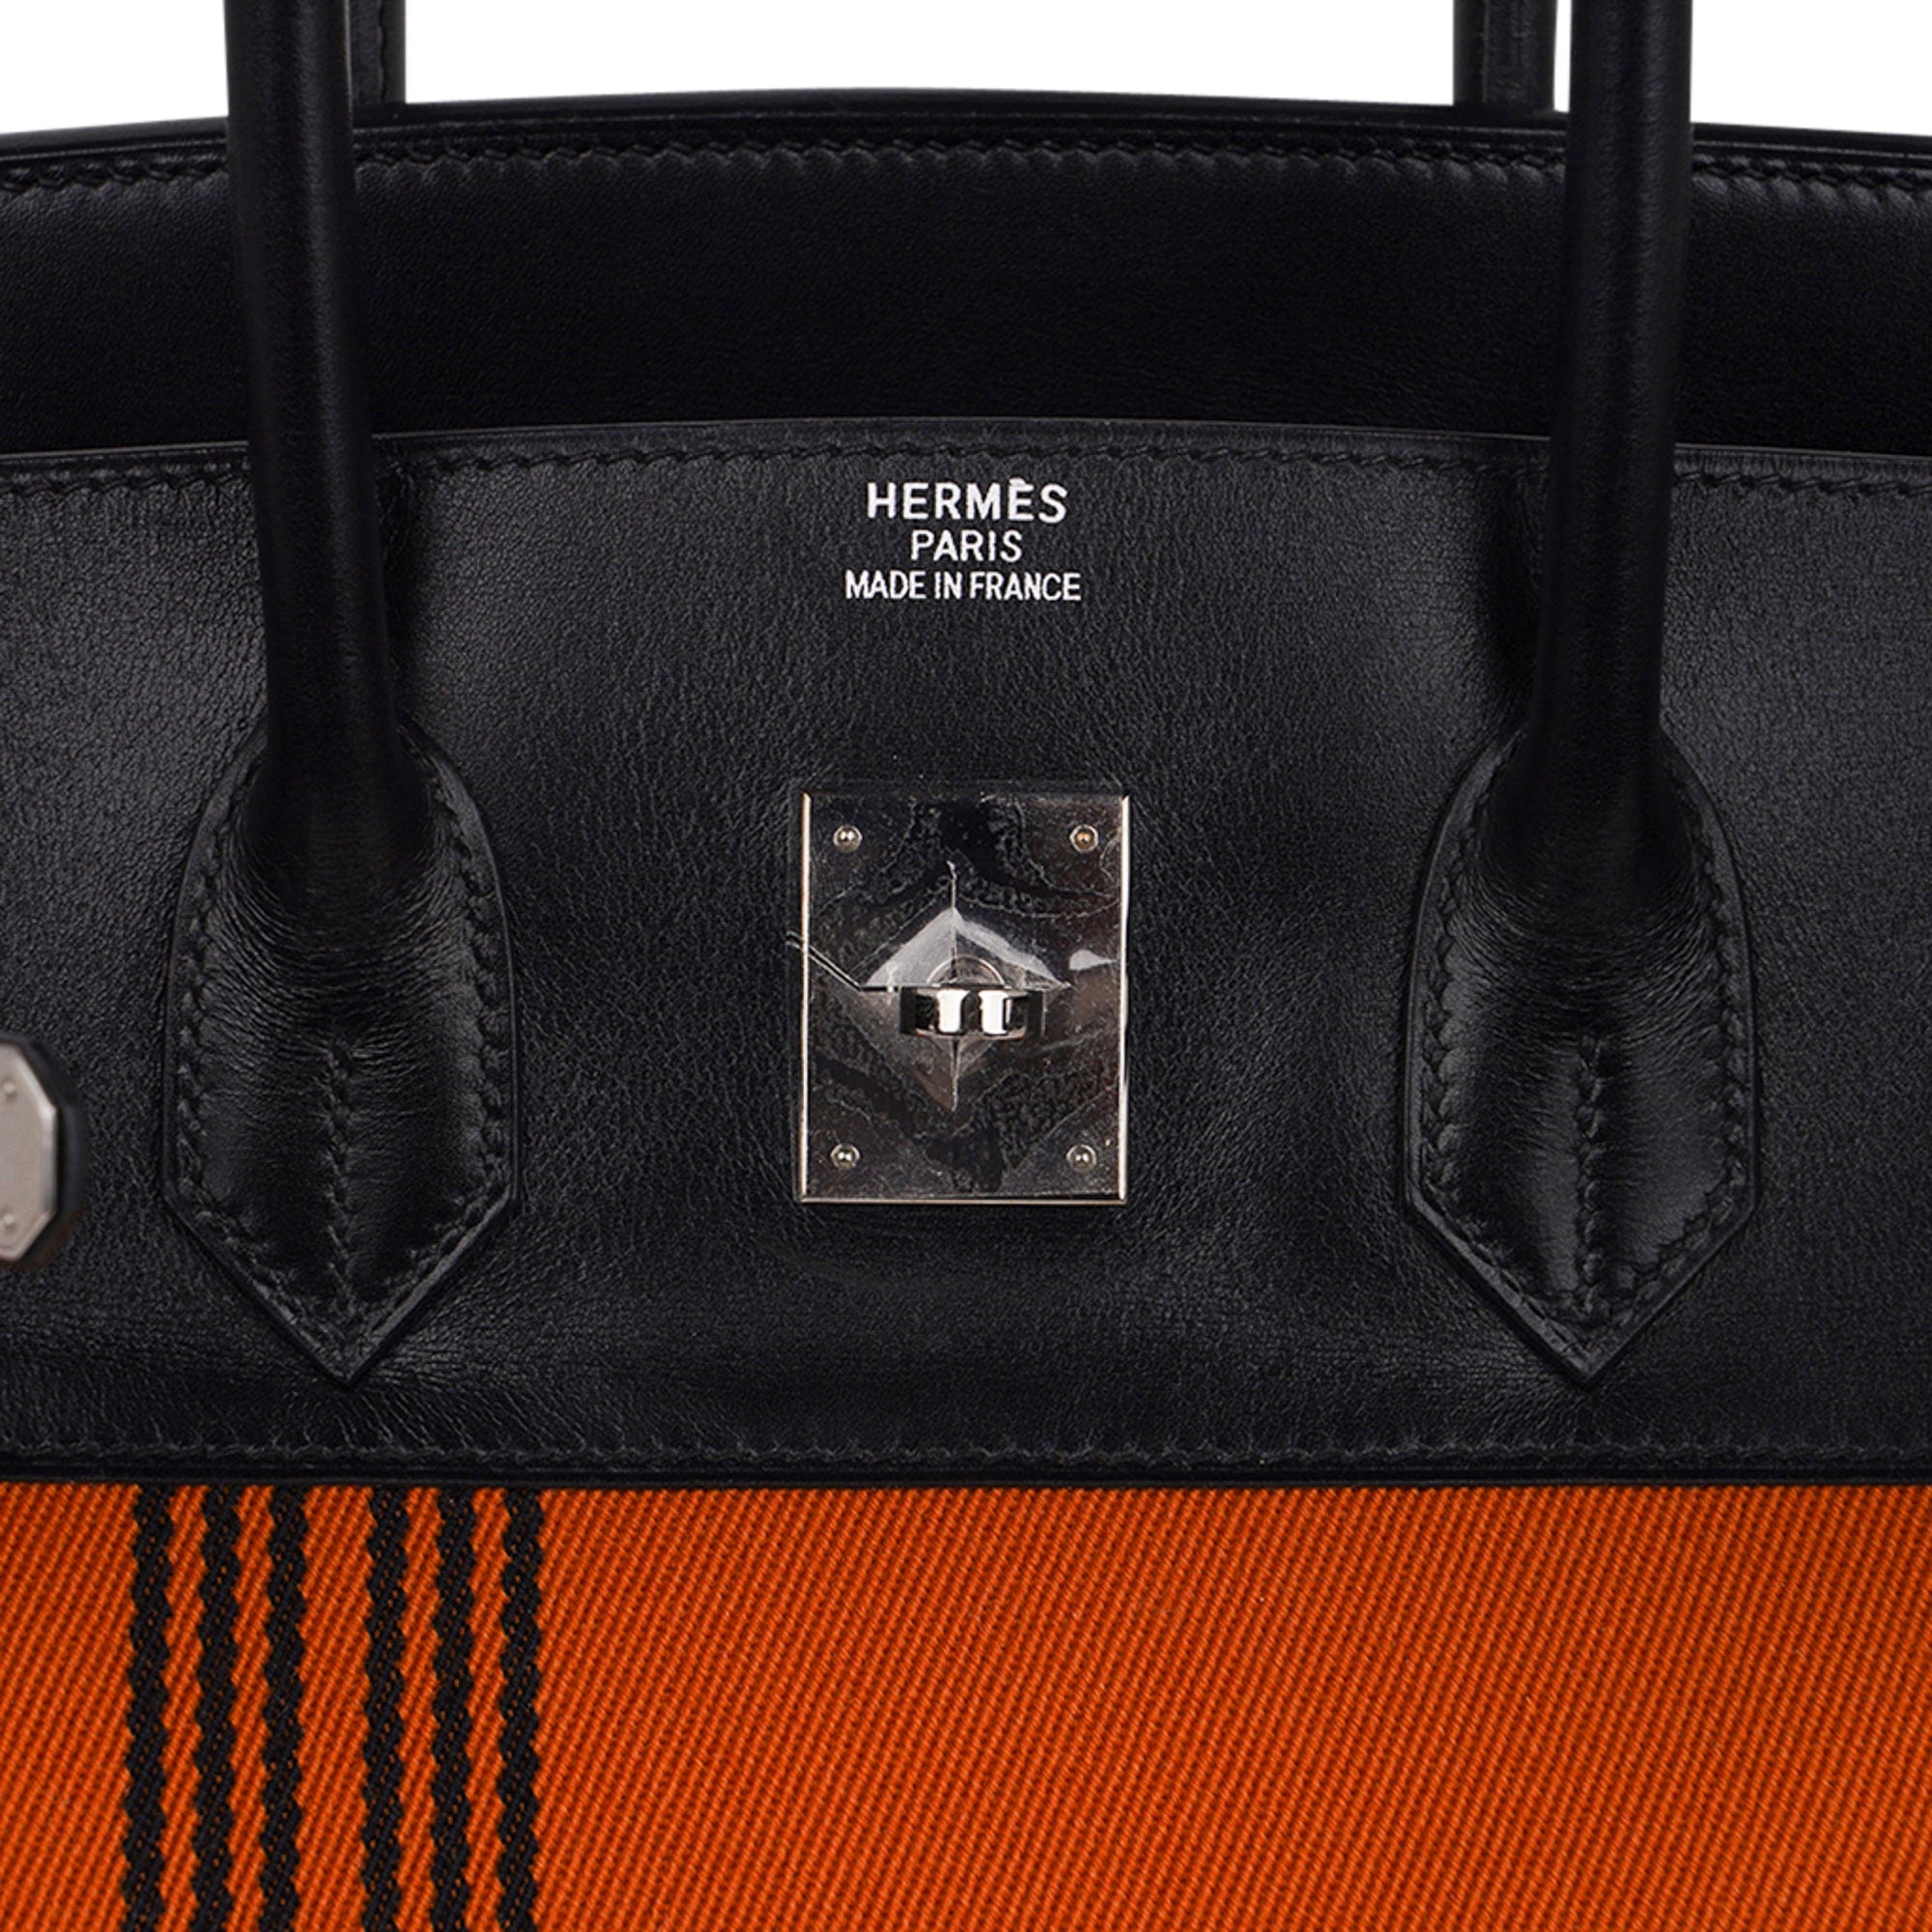 Hermes Birkin 35 Bag Potamus Toile / Box Limited Edition Palladium